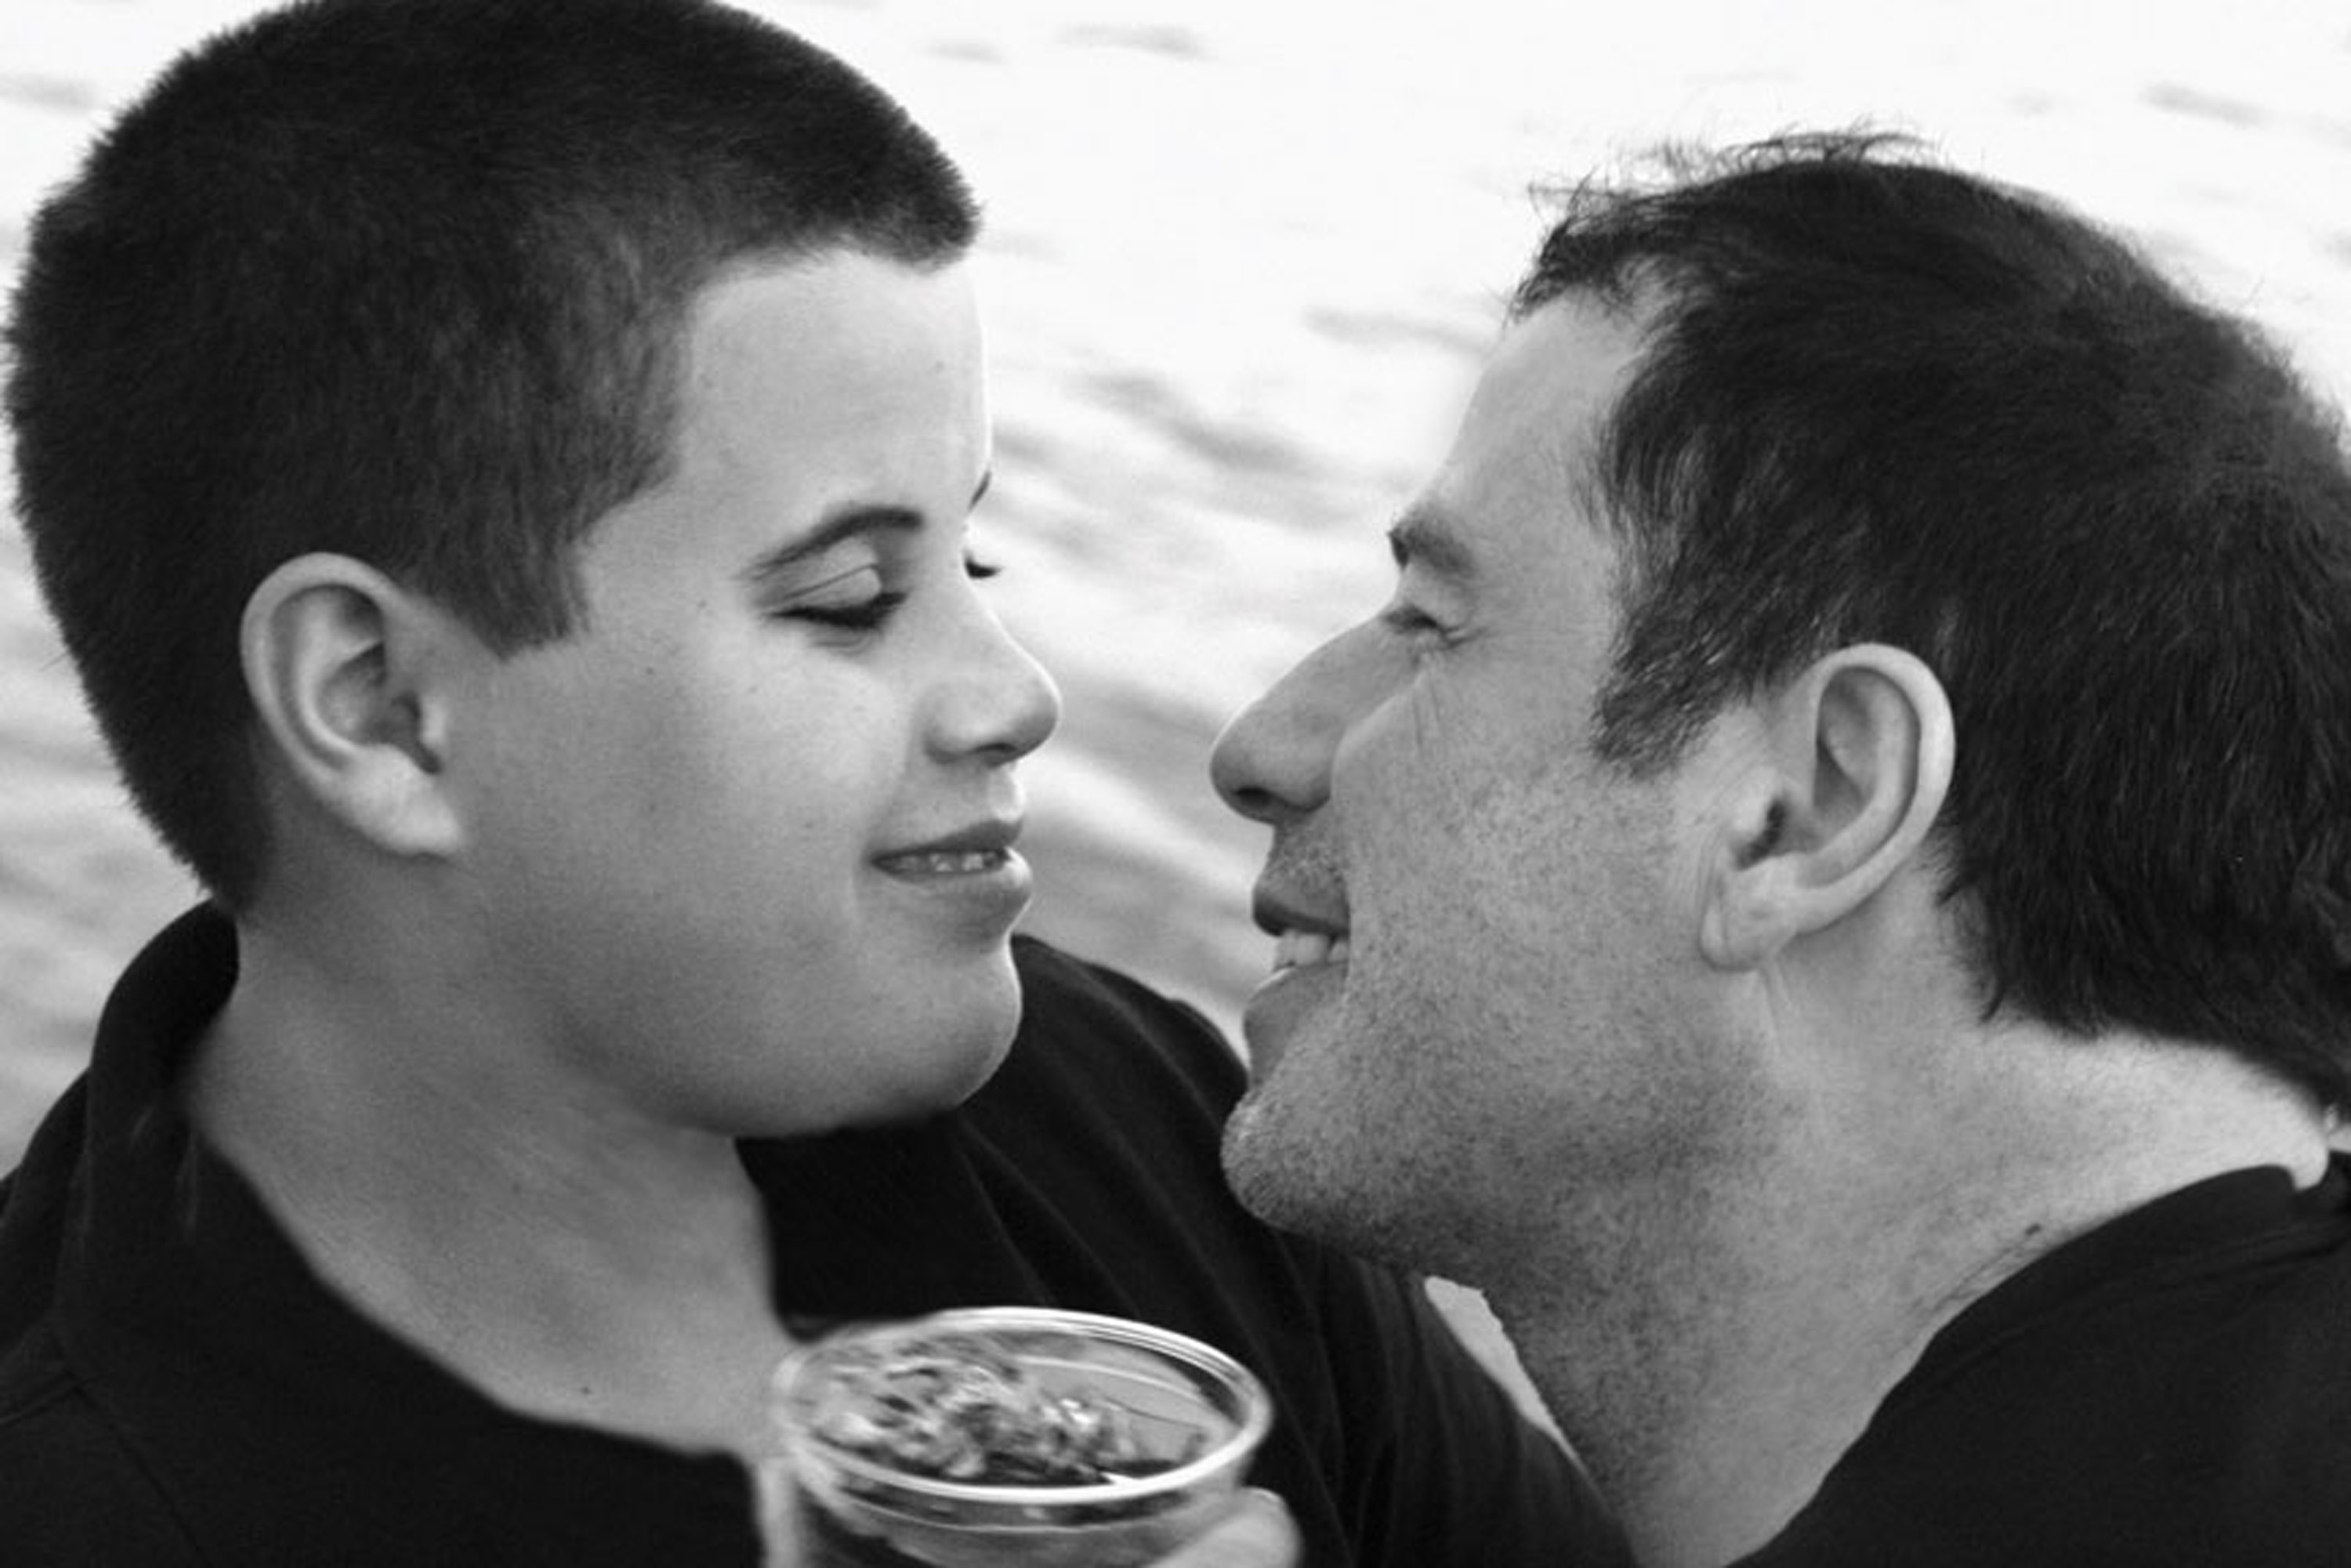 John Travolta avec son fils Jett Travolta en 2009. | Source : Getty Images